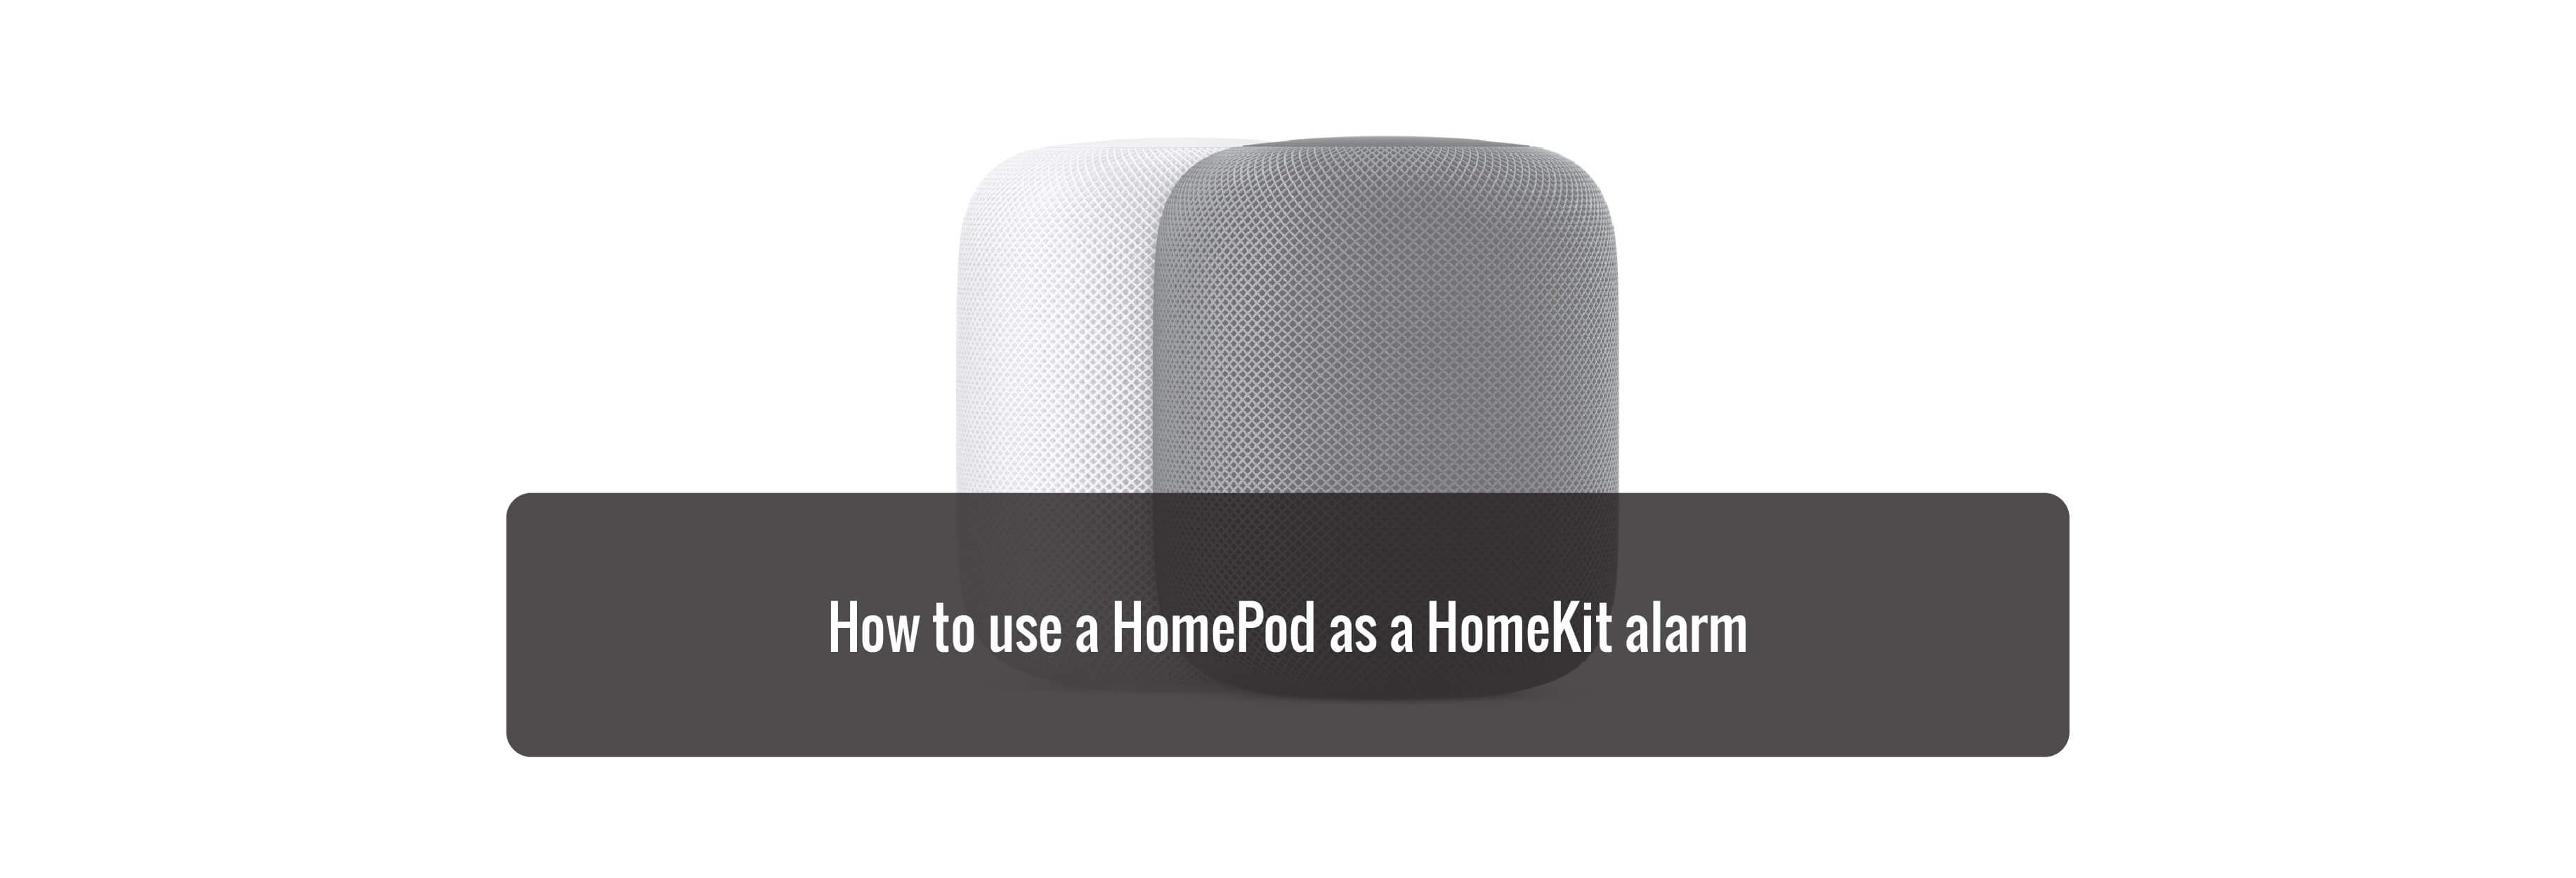 How to use a HomePod as a HomeKit alarm